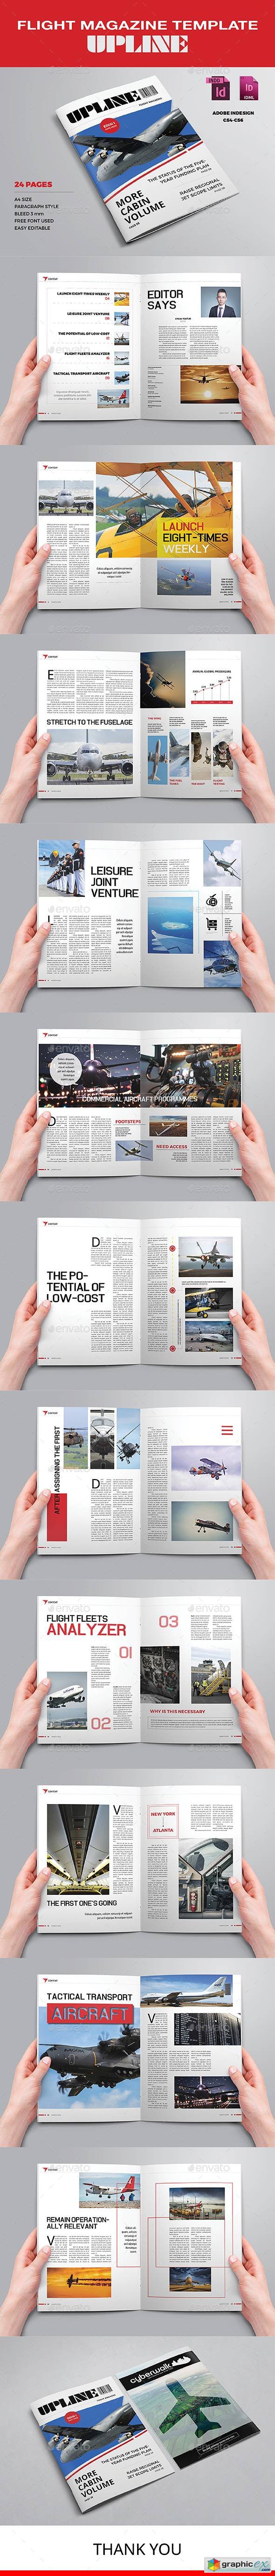 Flight Magazine Template - Upline